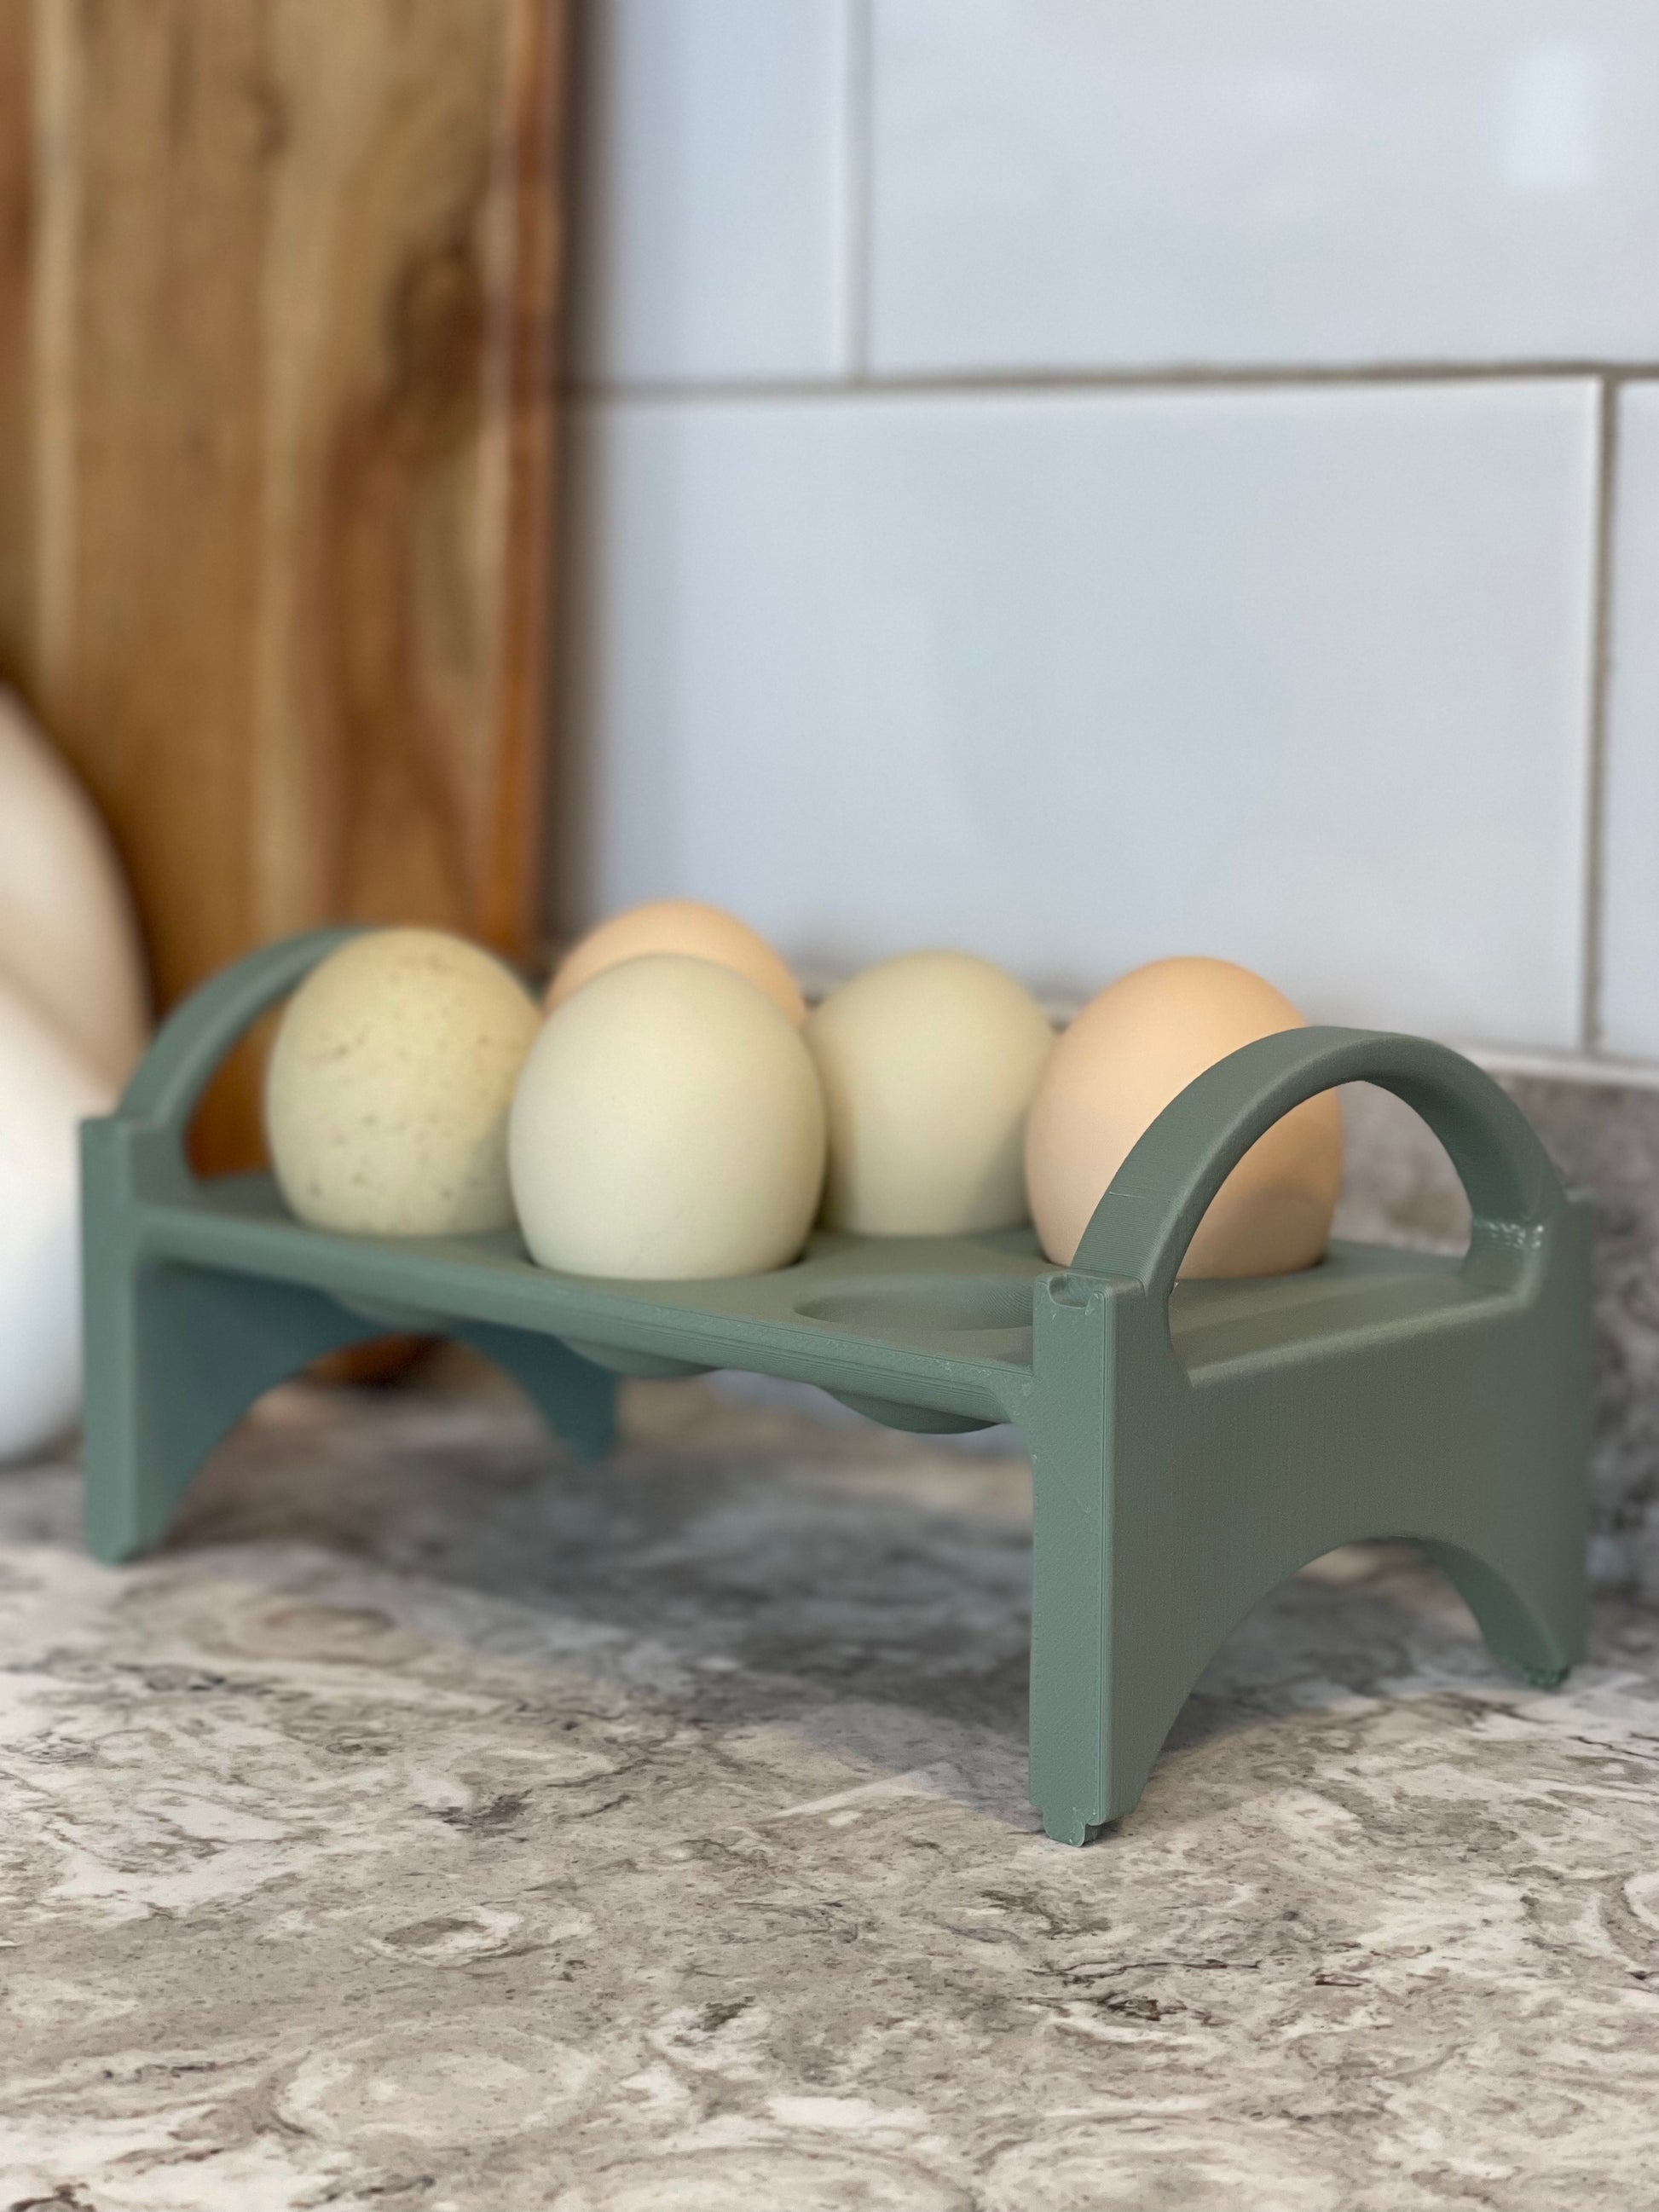 Stackable Egg Holder for your Countertop, Chicken Egg Holder